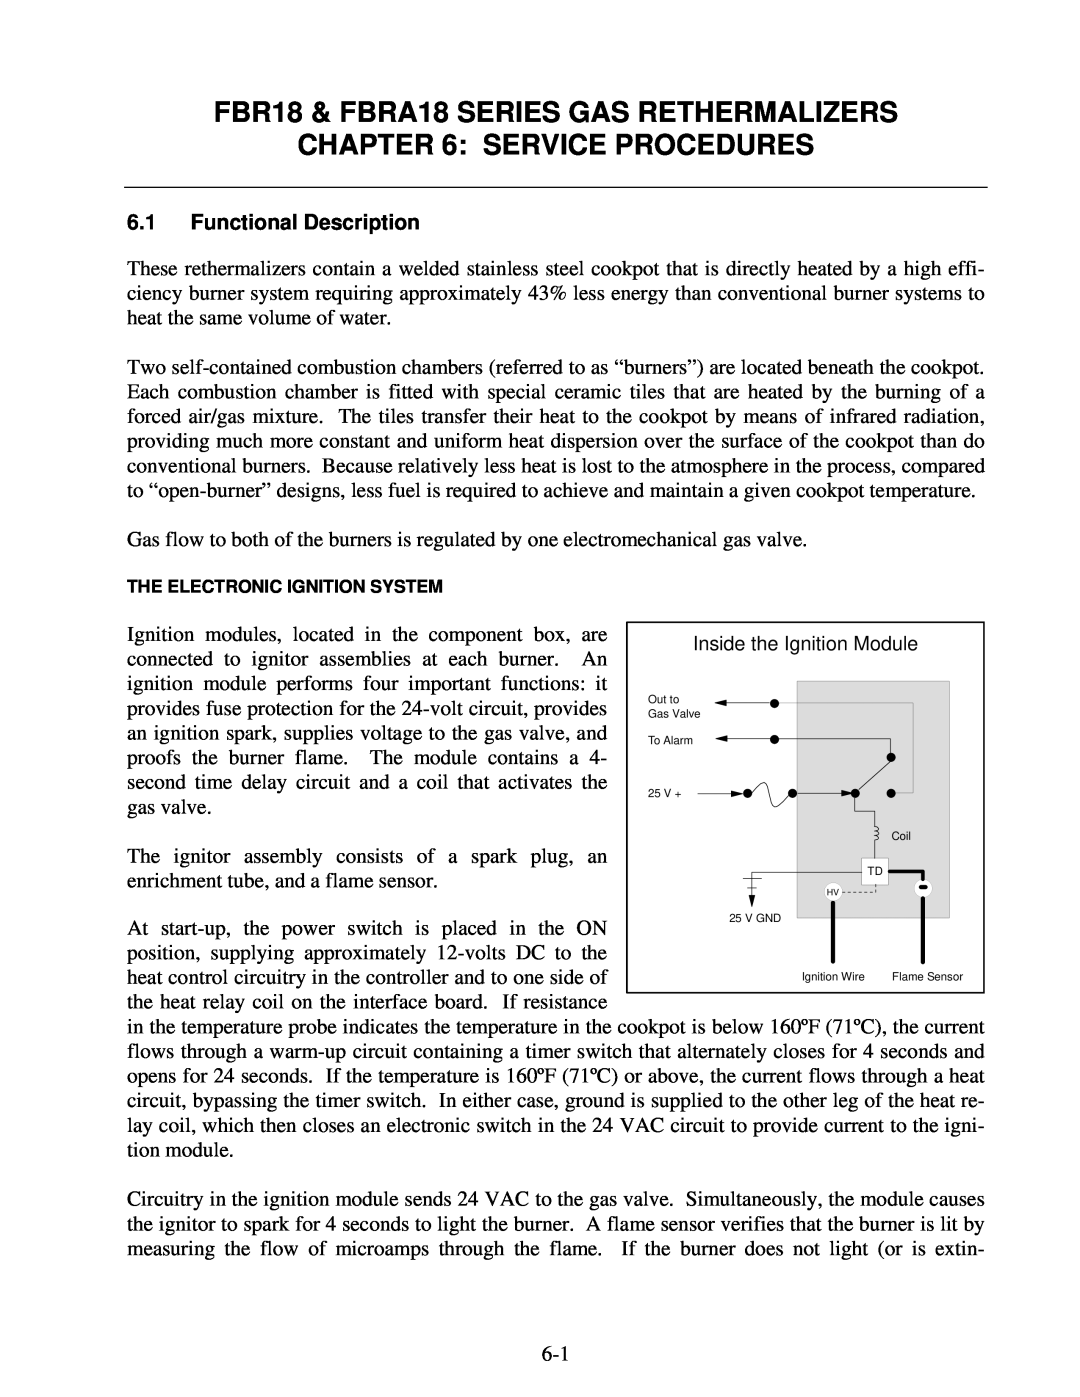 Frymaster FBR18 Series manual Service Procedures, 6.1Functional Description, FBR18 & FBRA18 SERIES GAS RETHERMALIZERS 